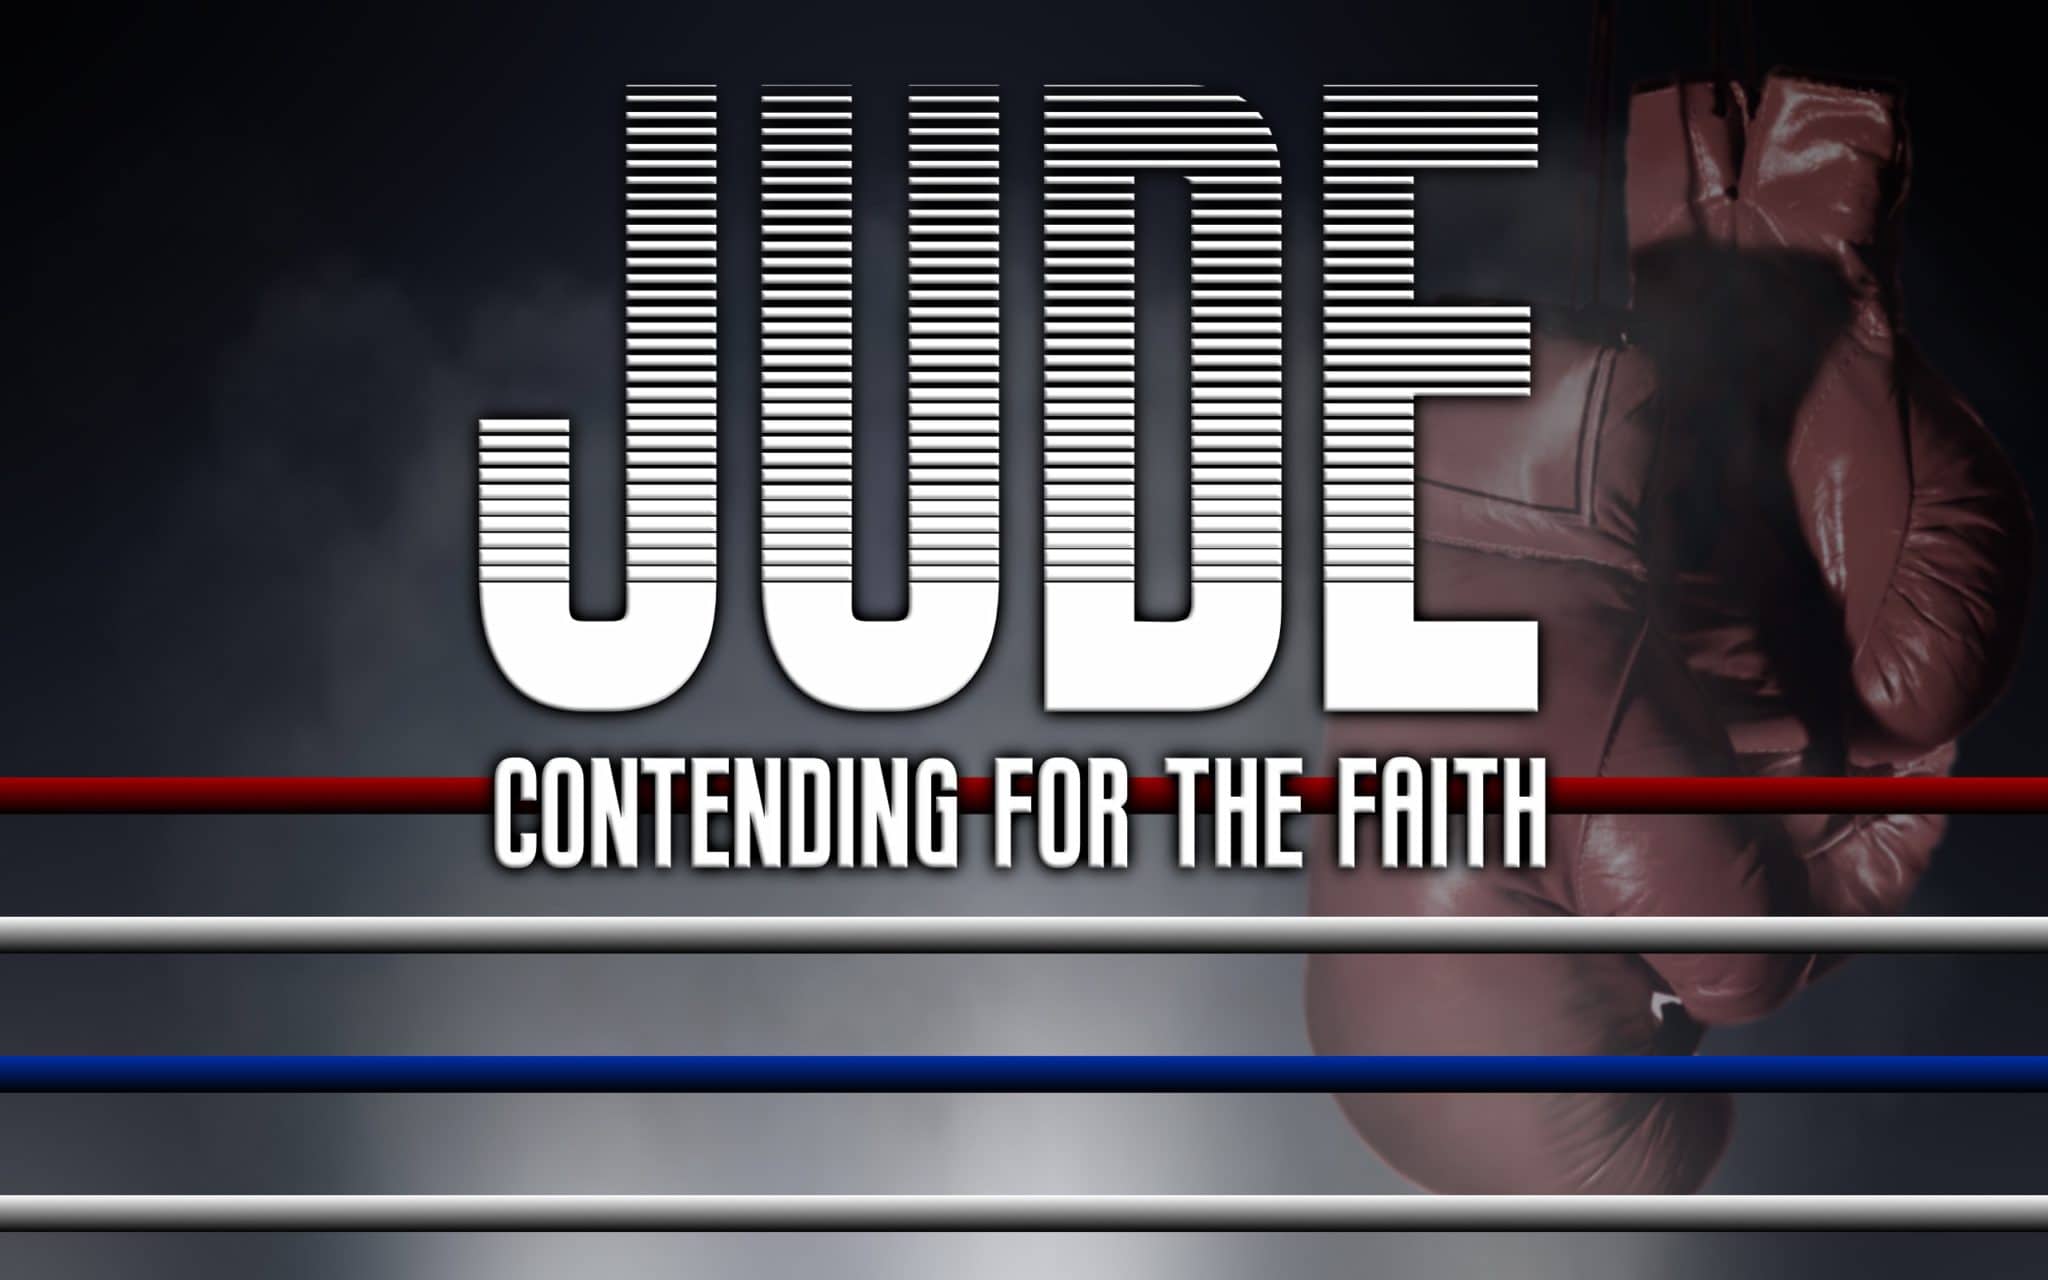 Jude: Contending for the Faith